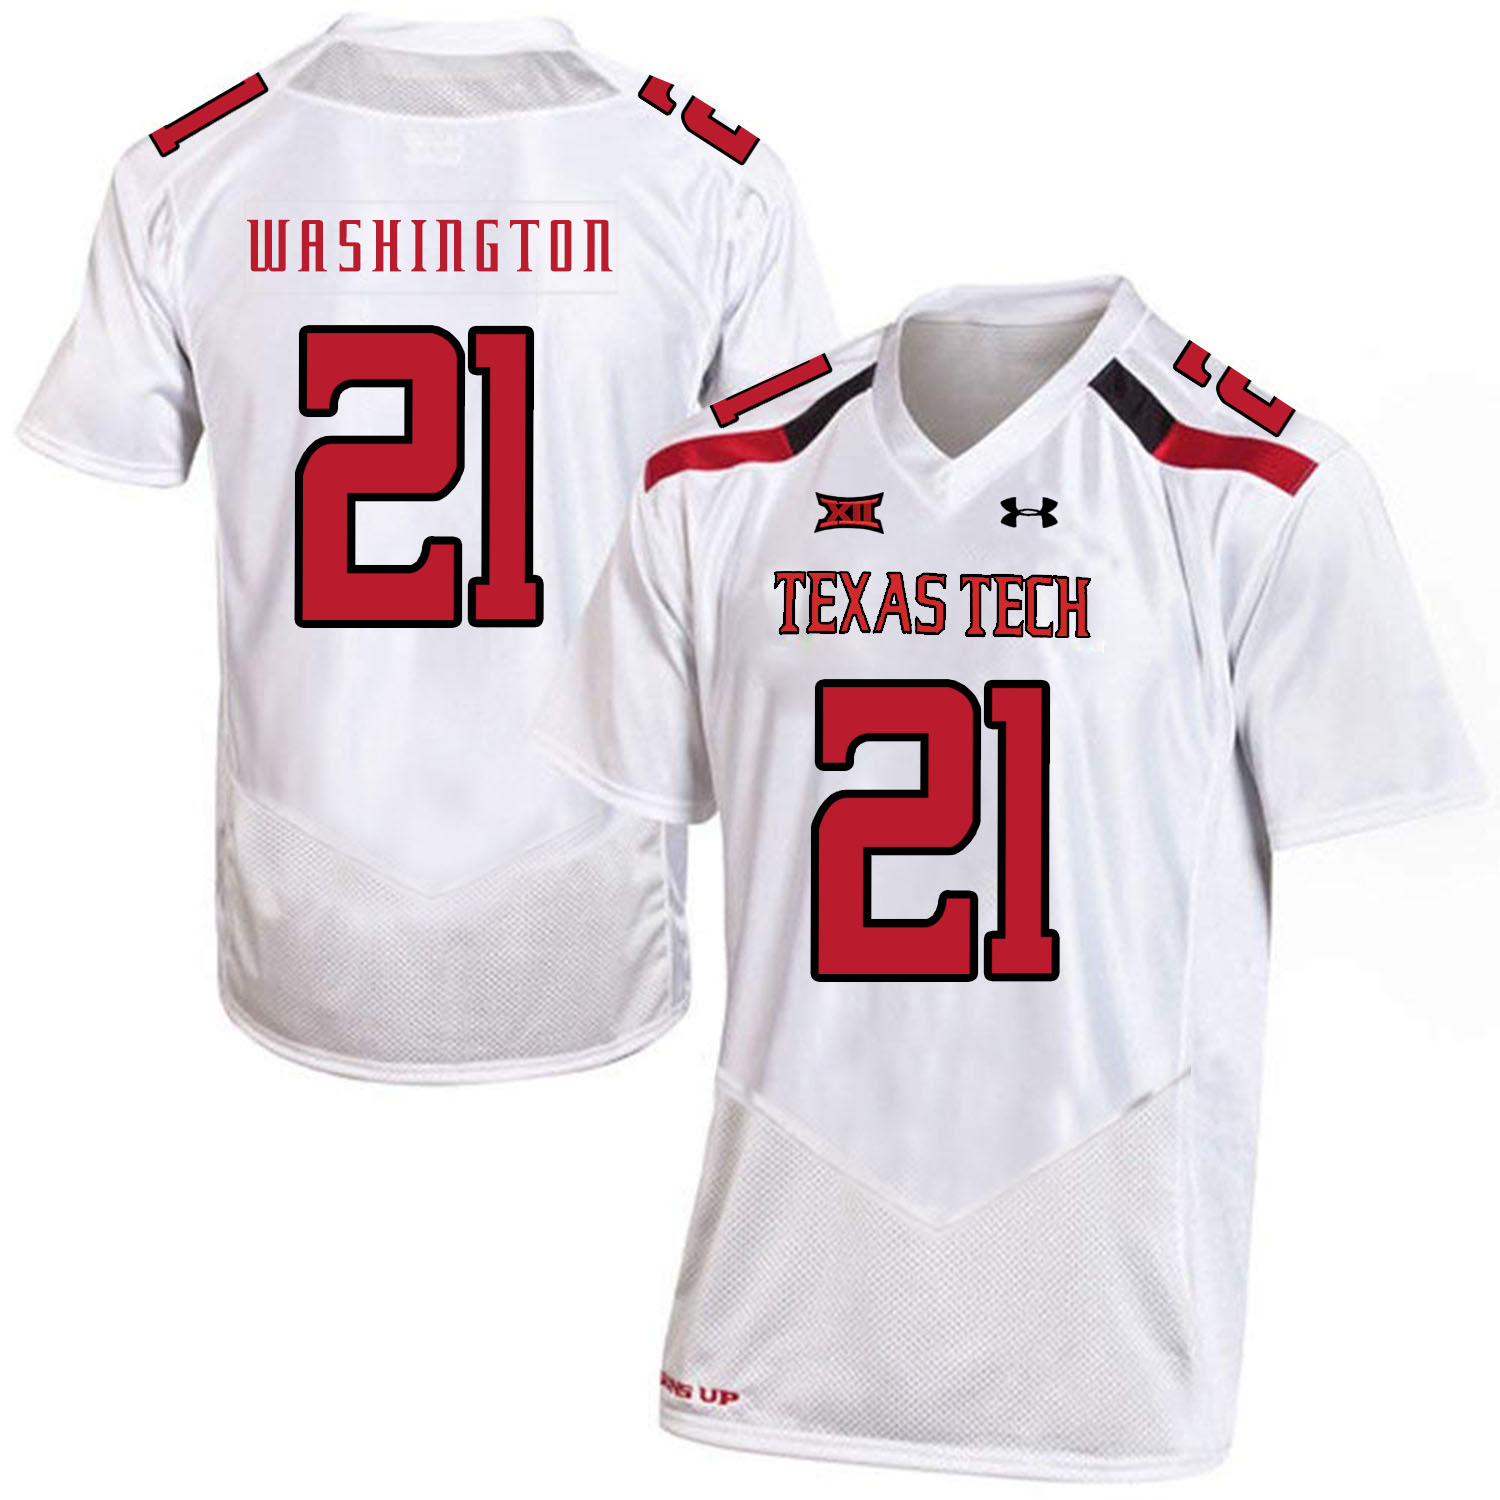 Texas Tech Red Raiders 21 DeAndre Washington White College Football Jersey